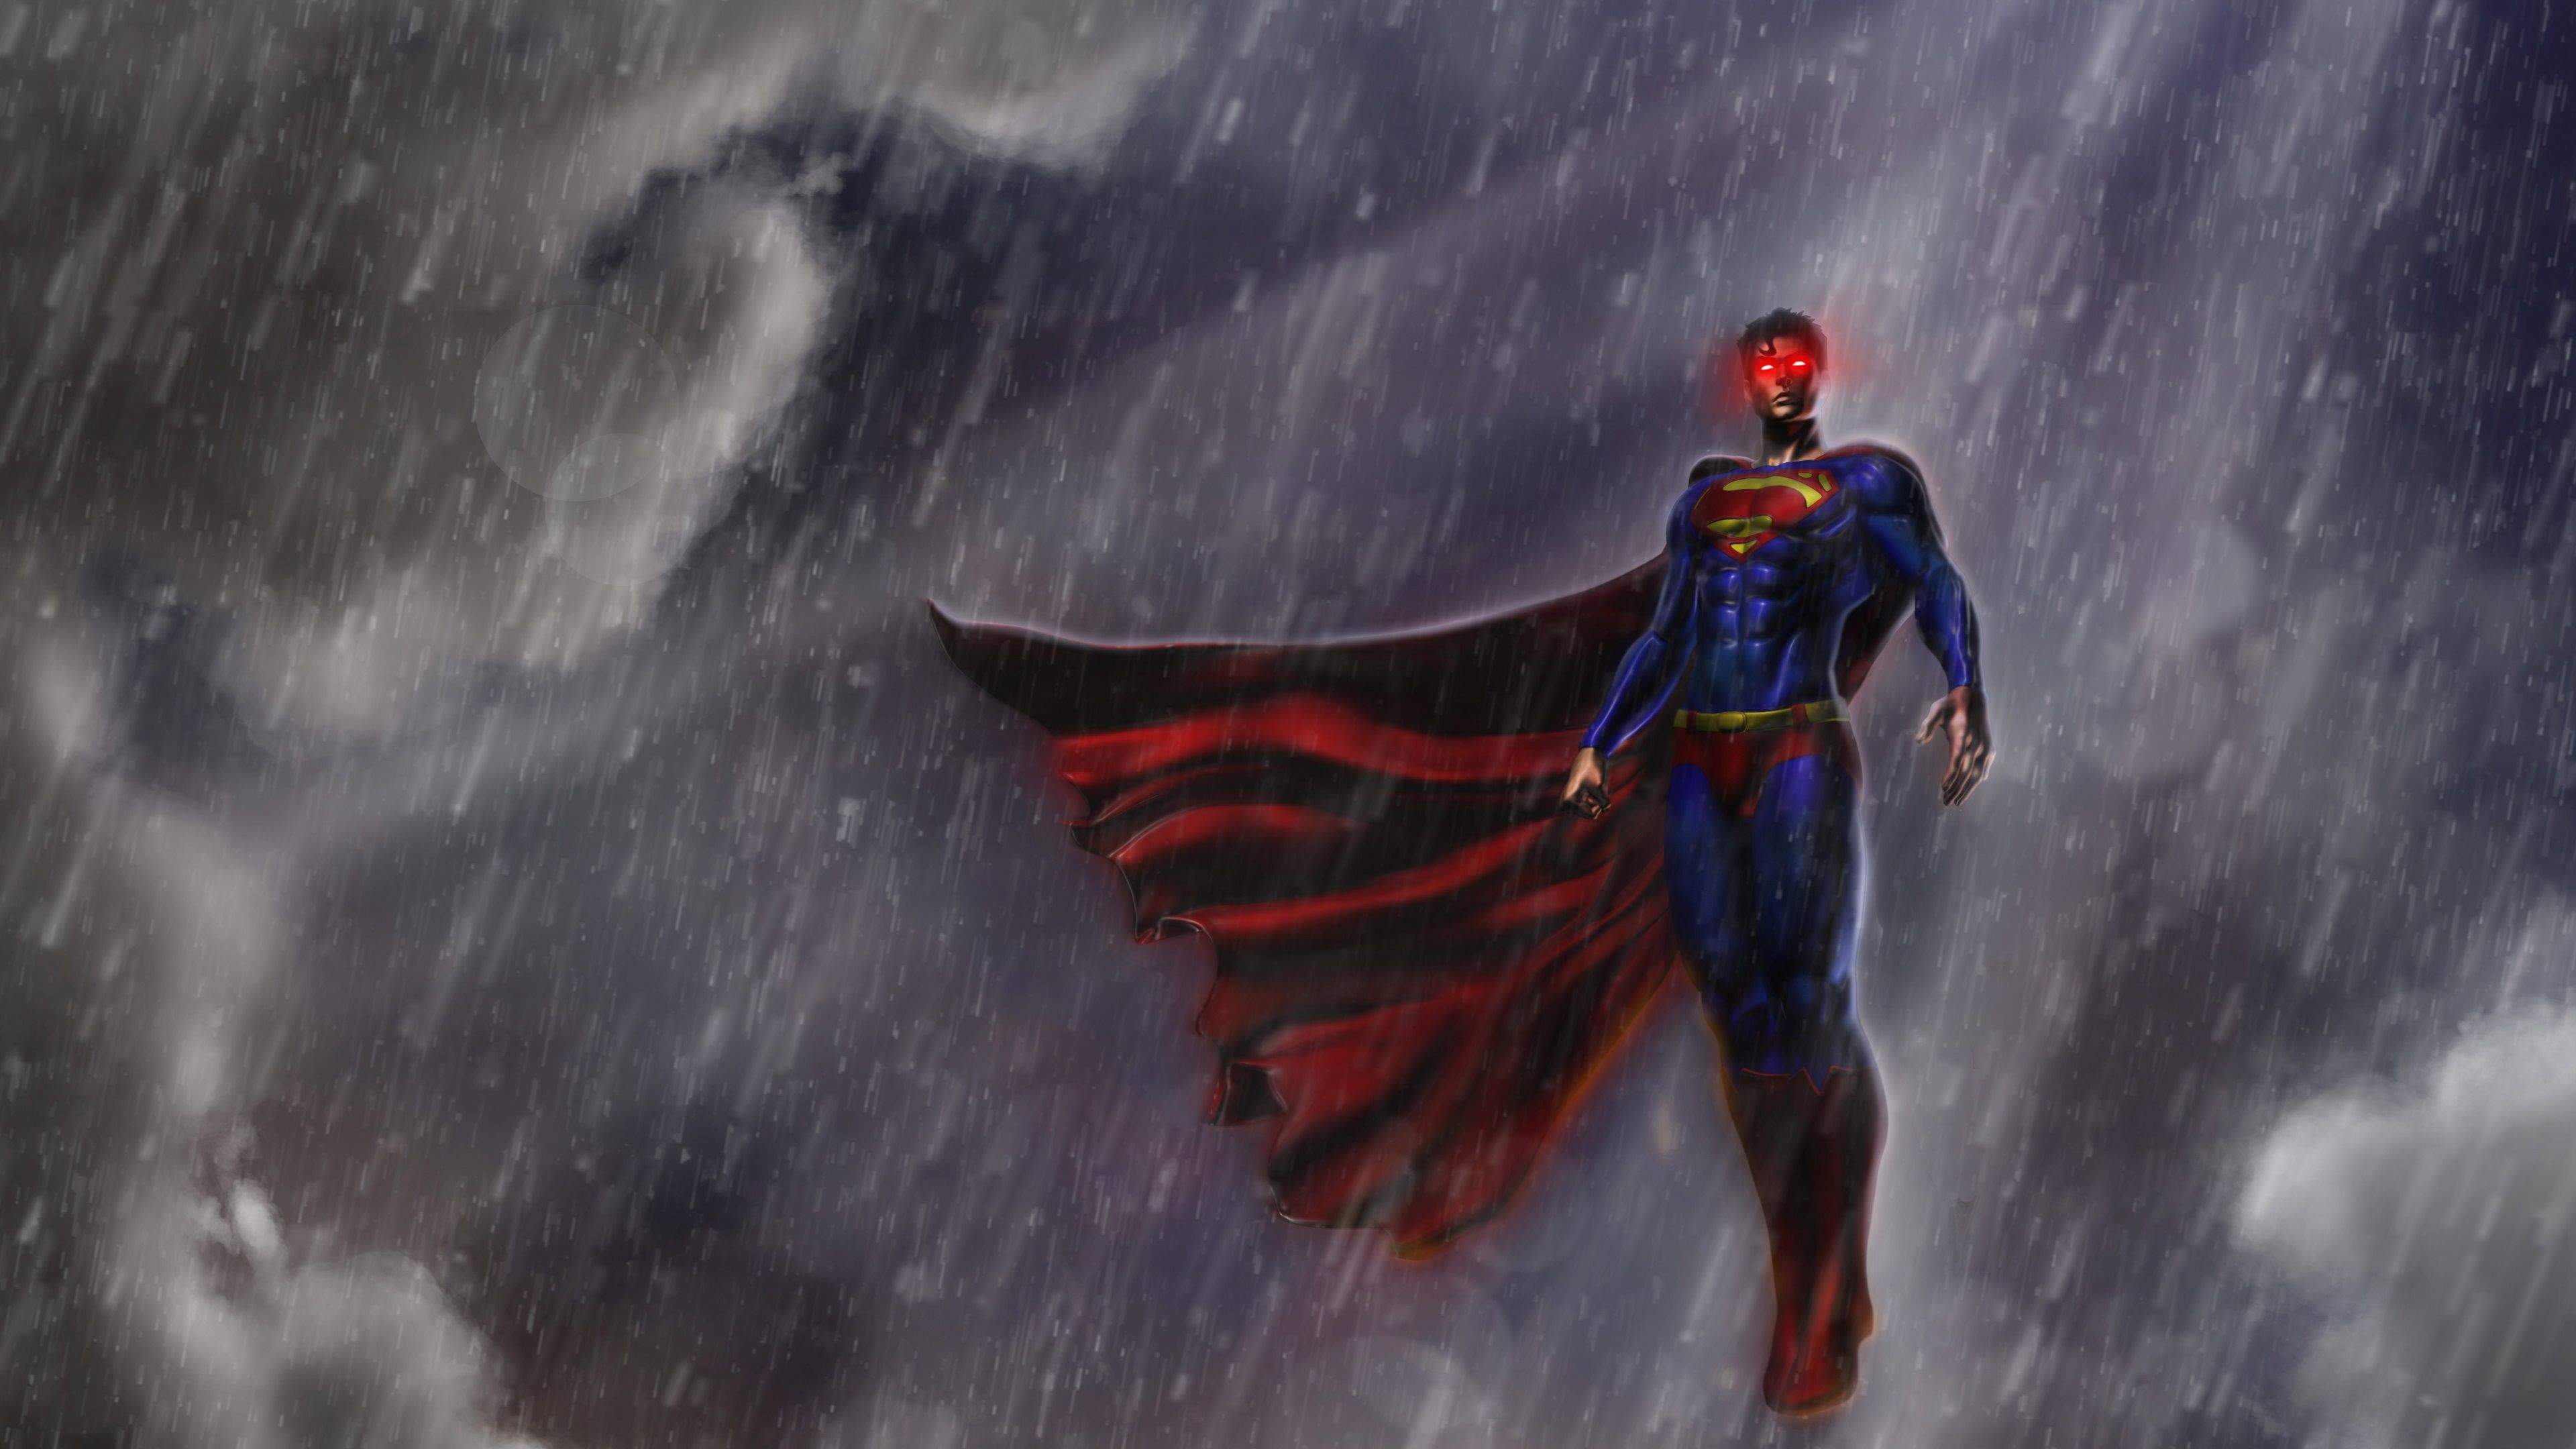 Ruuudyyy Evil superman dark superman red glowing eyes buff  physic dark superman suit